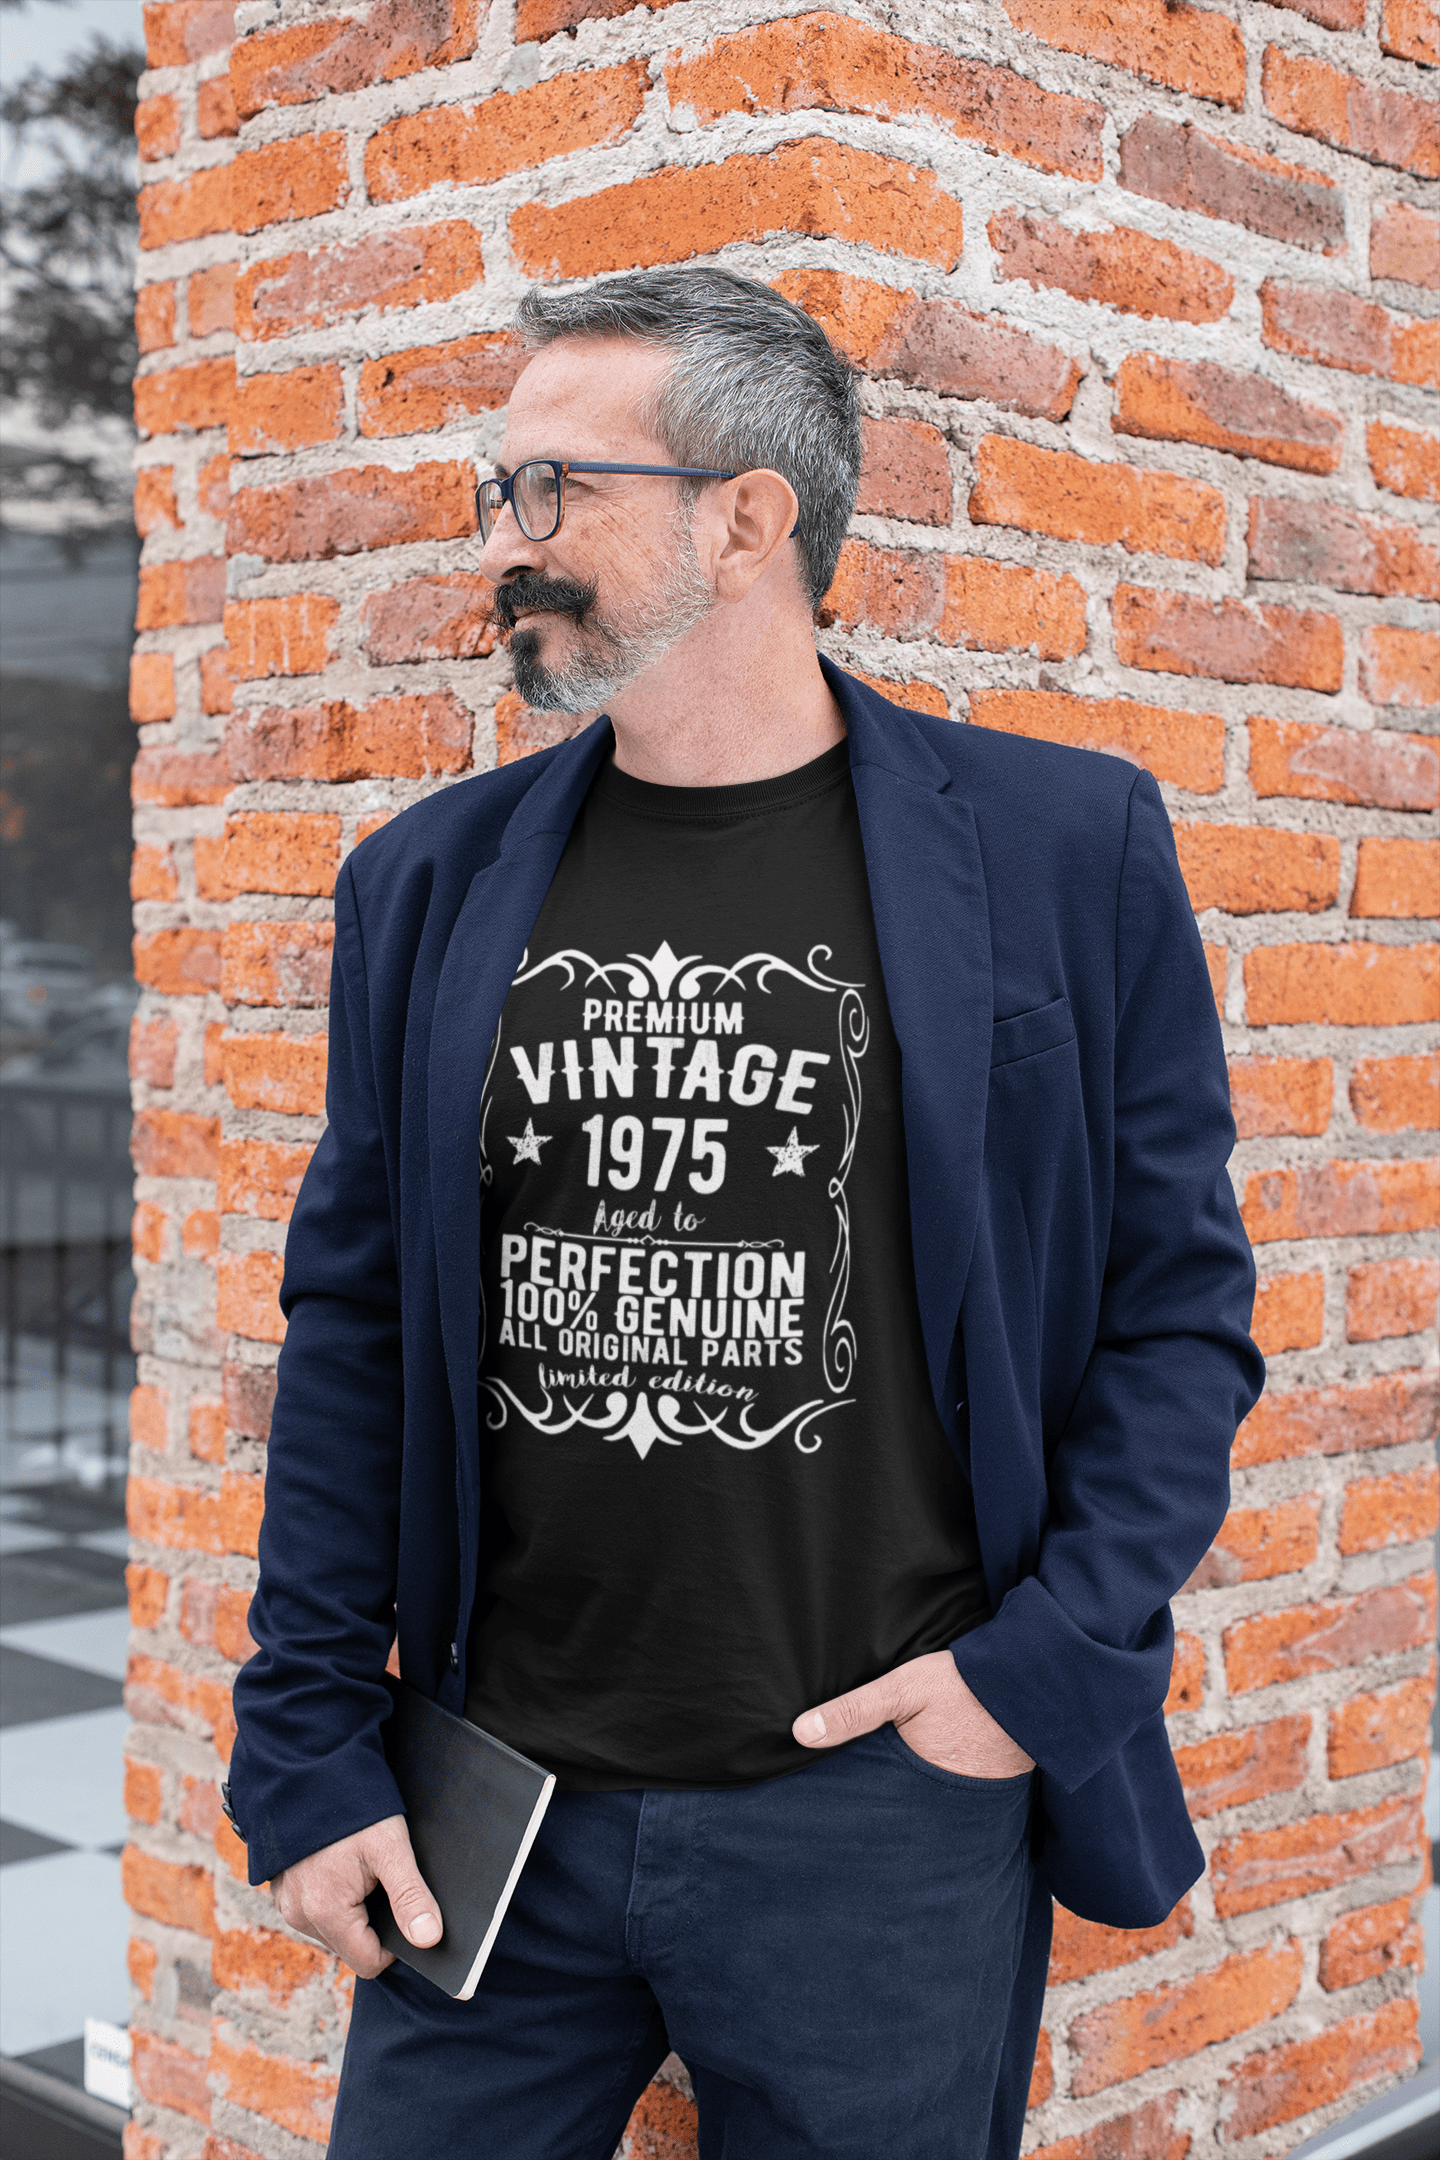 Homme Tee Vintage T-Shirt Premium Vintage Jahr 1975